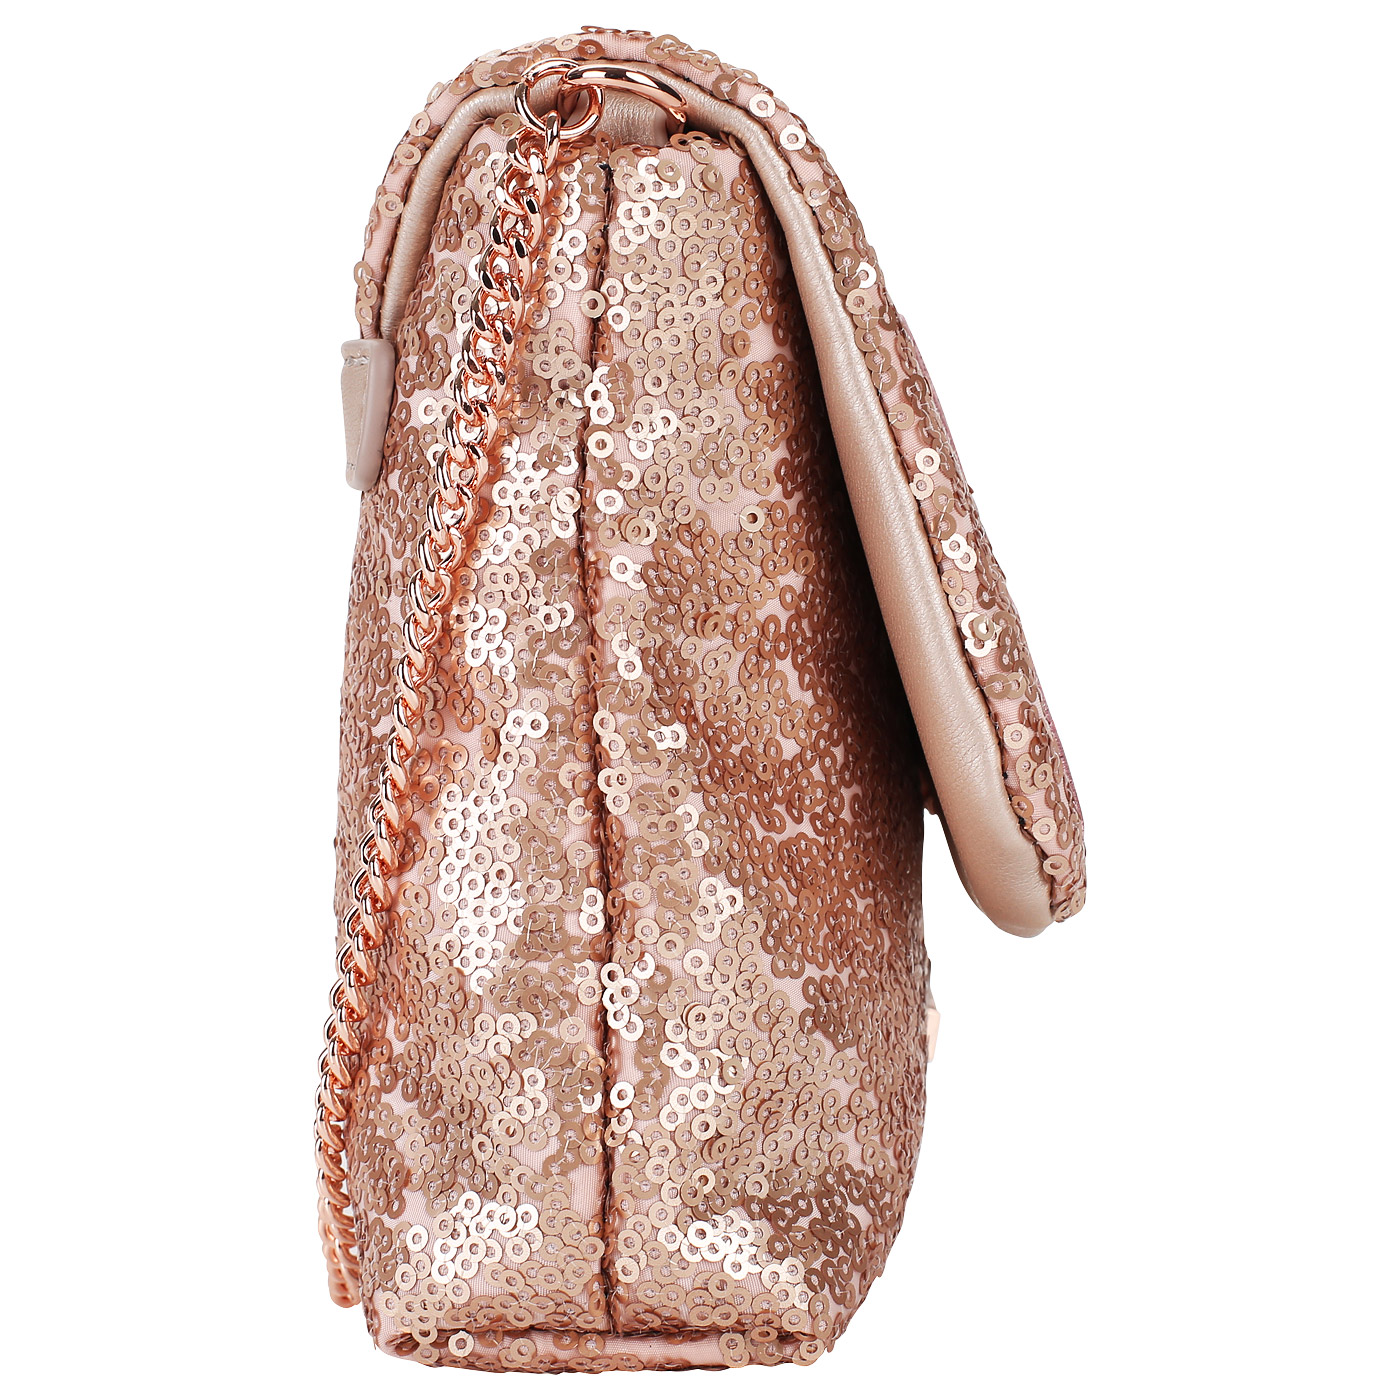 Женская сумка с пайетками Love Moschino Love Sequins